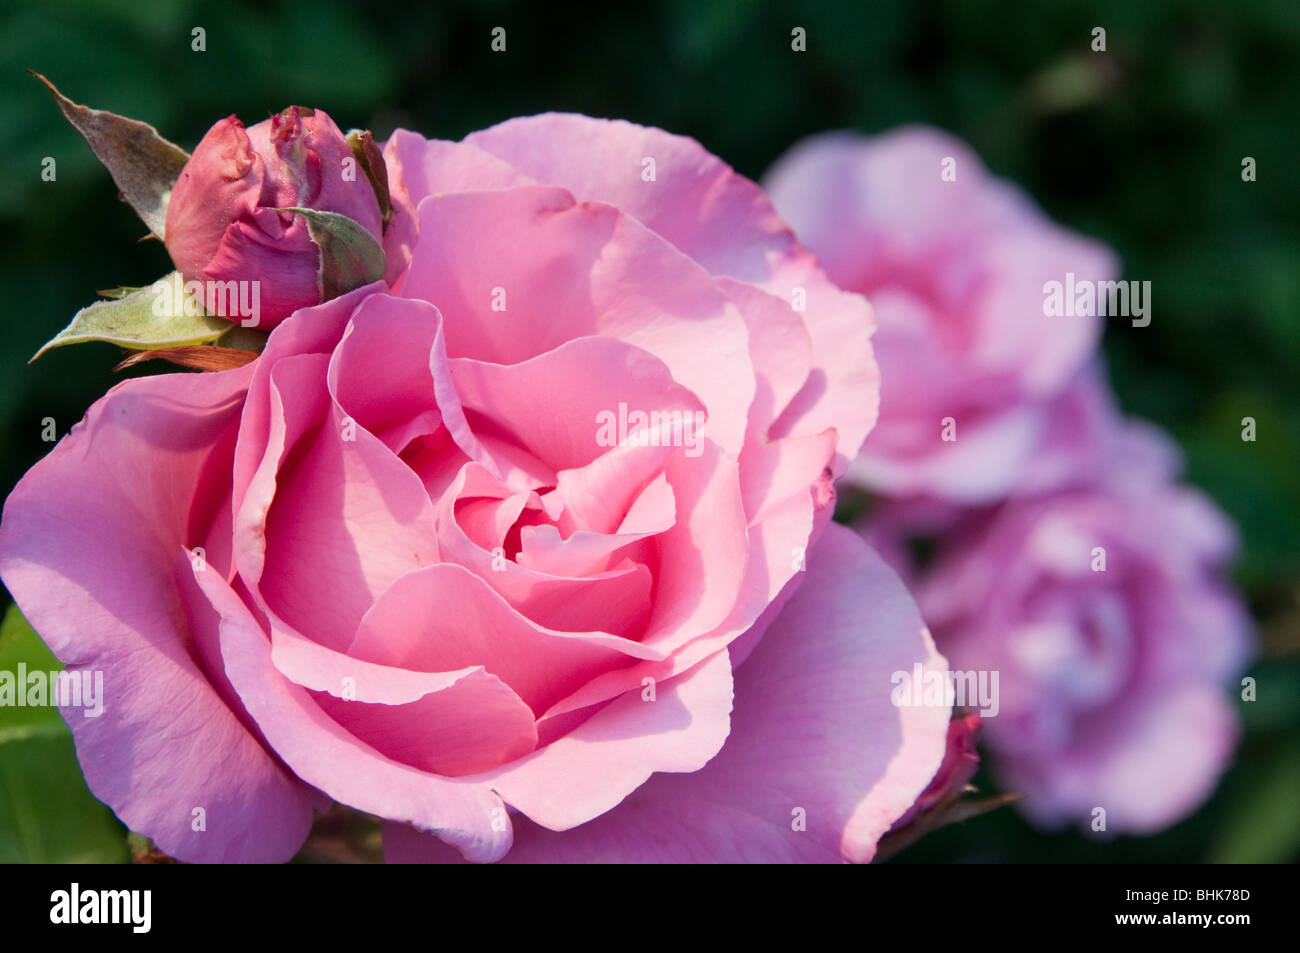 Rose, parco Planten un Blomen, Amburgo, Deutschland | rosato, il parco  Planten un Blomen, Amburgo, Germania Foto stock - Alamy